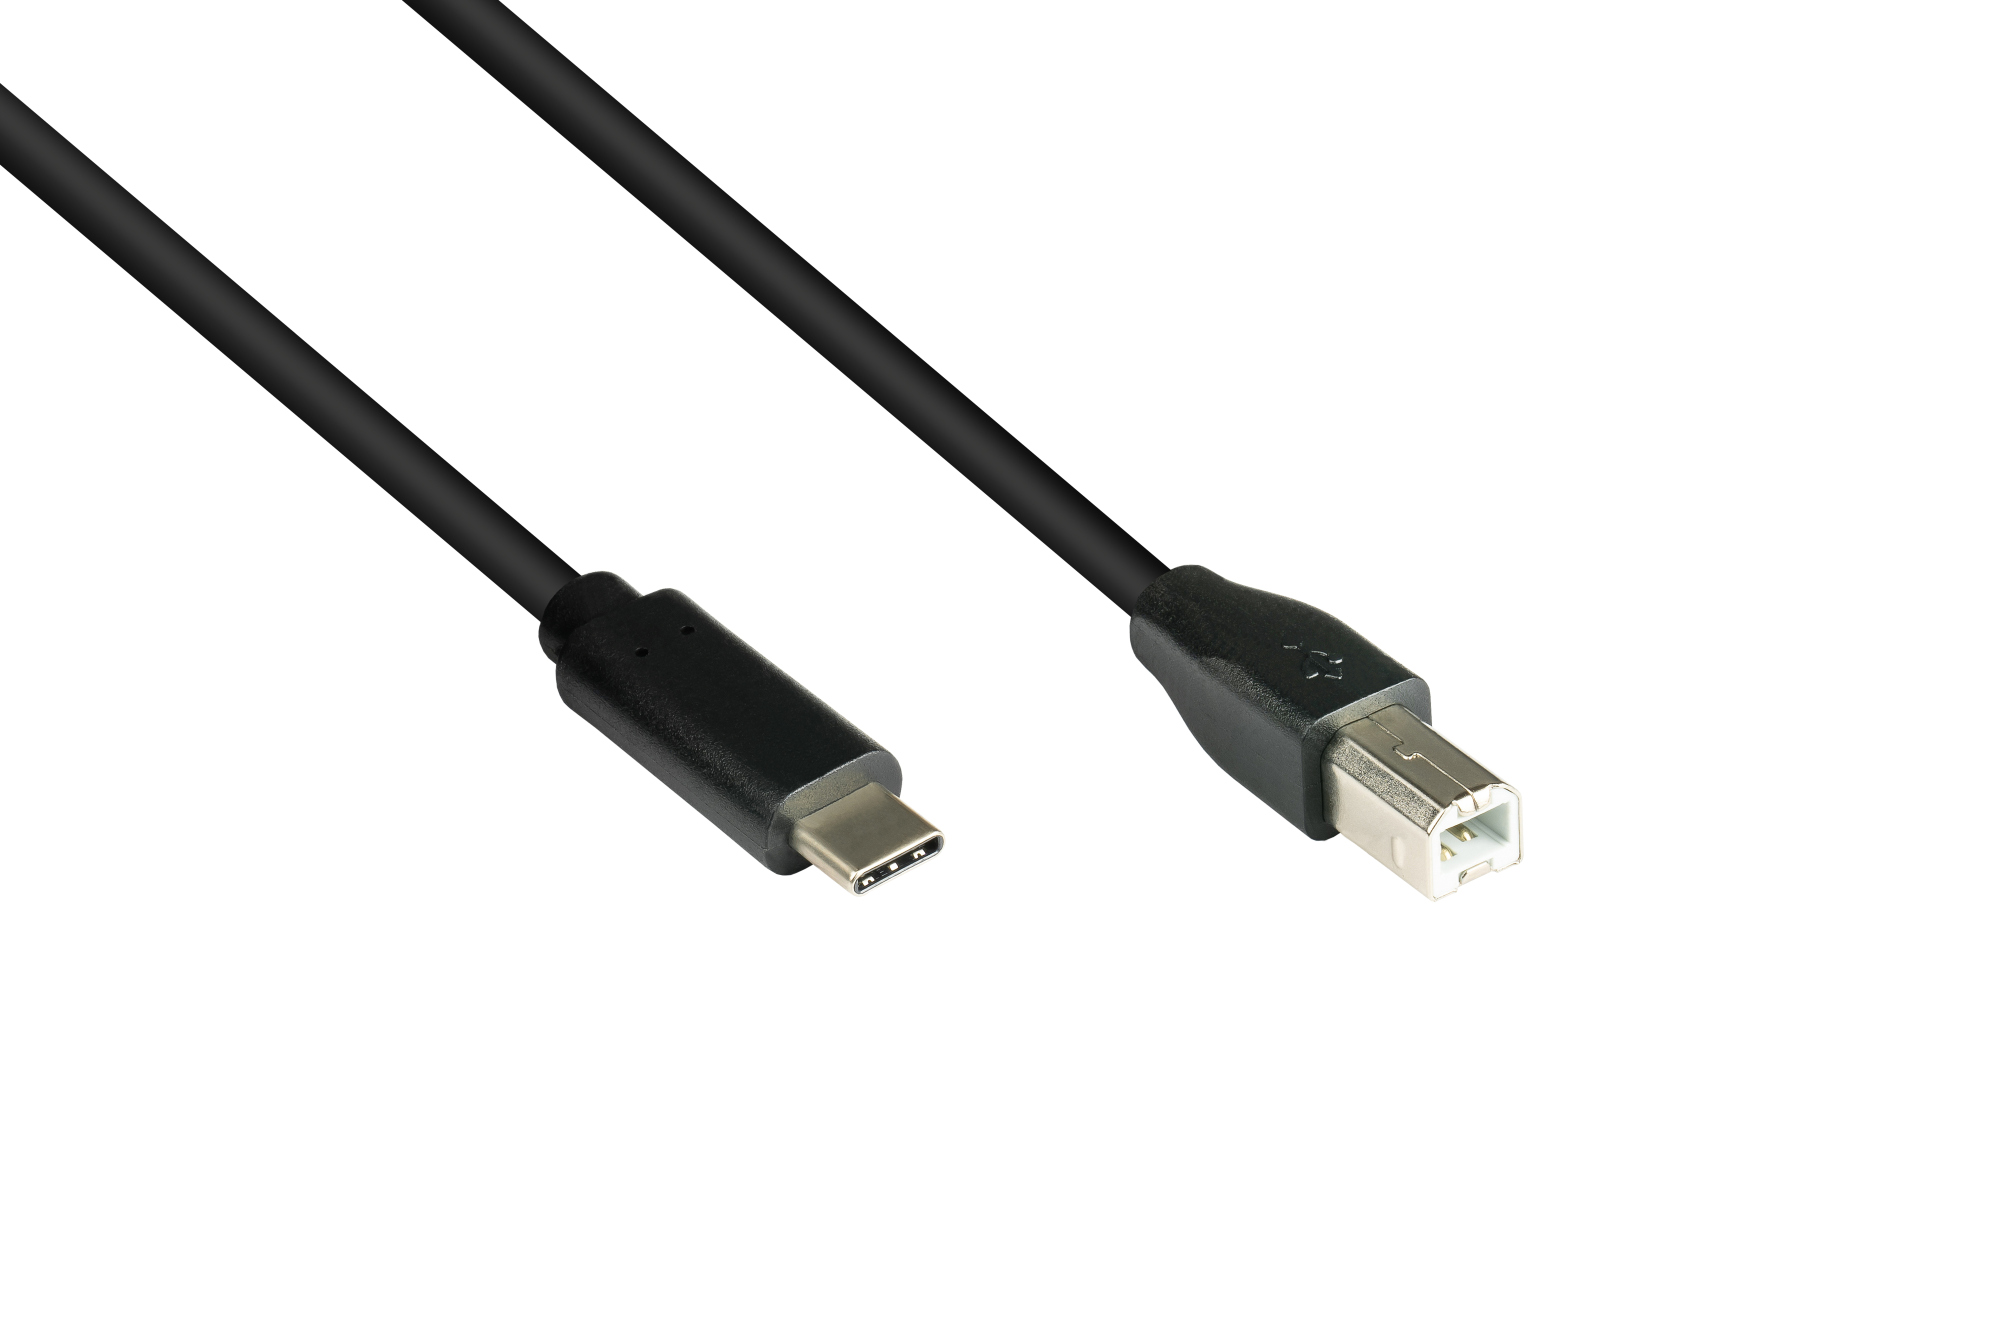 Anschlusskabel USB 2.0, USB-C™ Stecker an USB 2.0 B Stecker, CU, schwarz, 1m